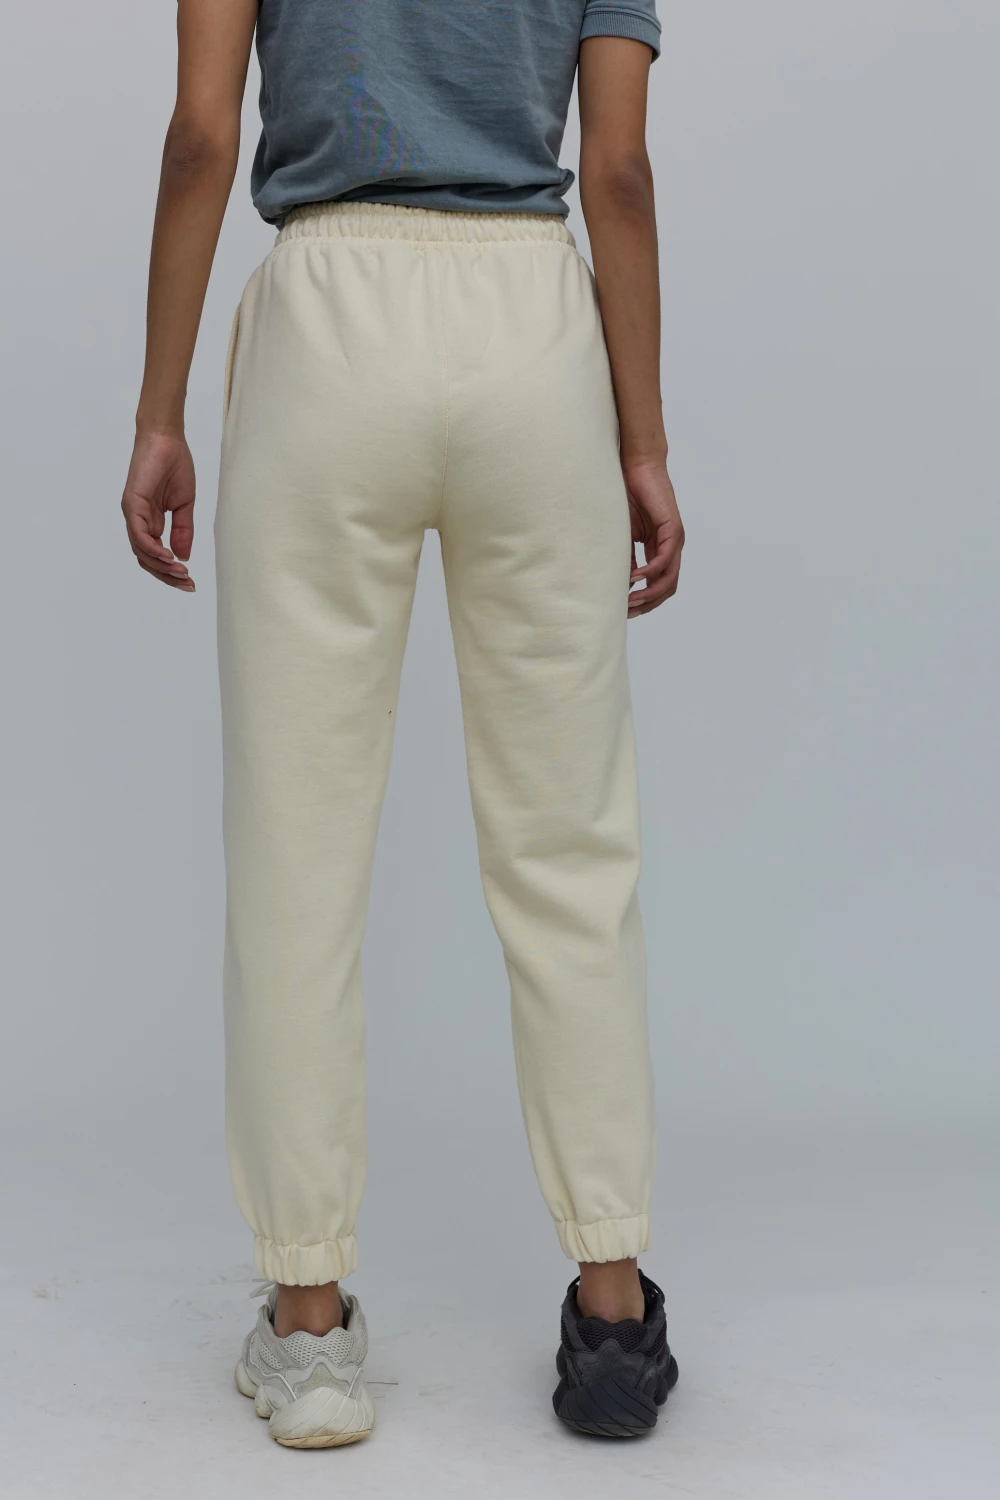 unisex pants in vanilla color